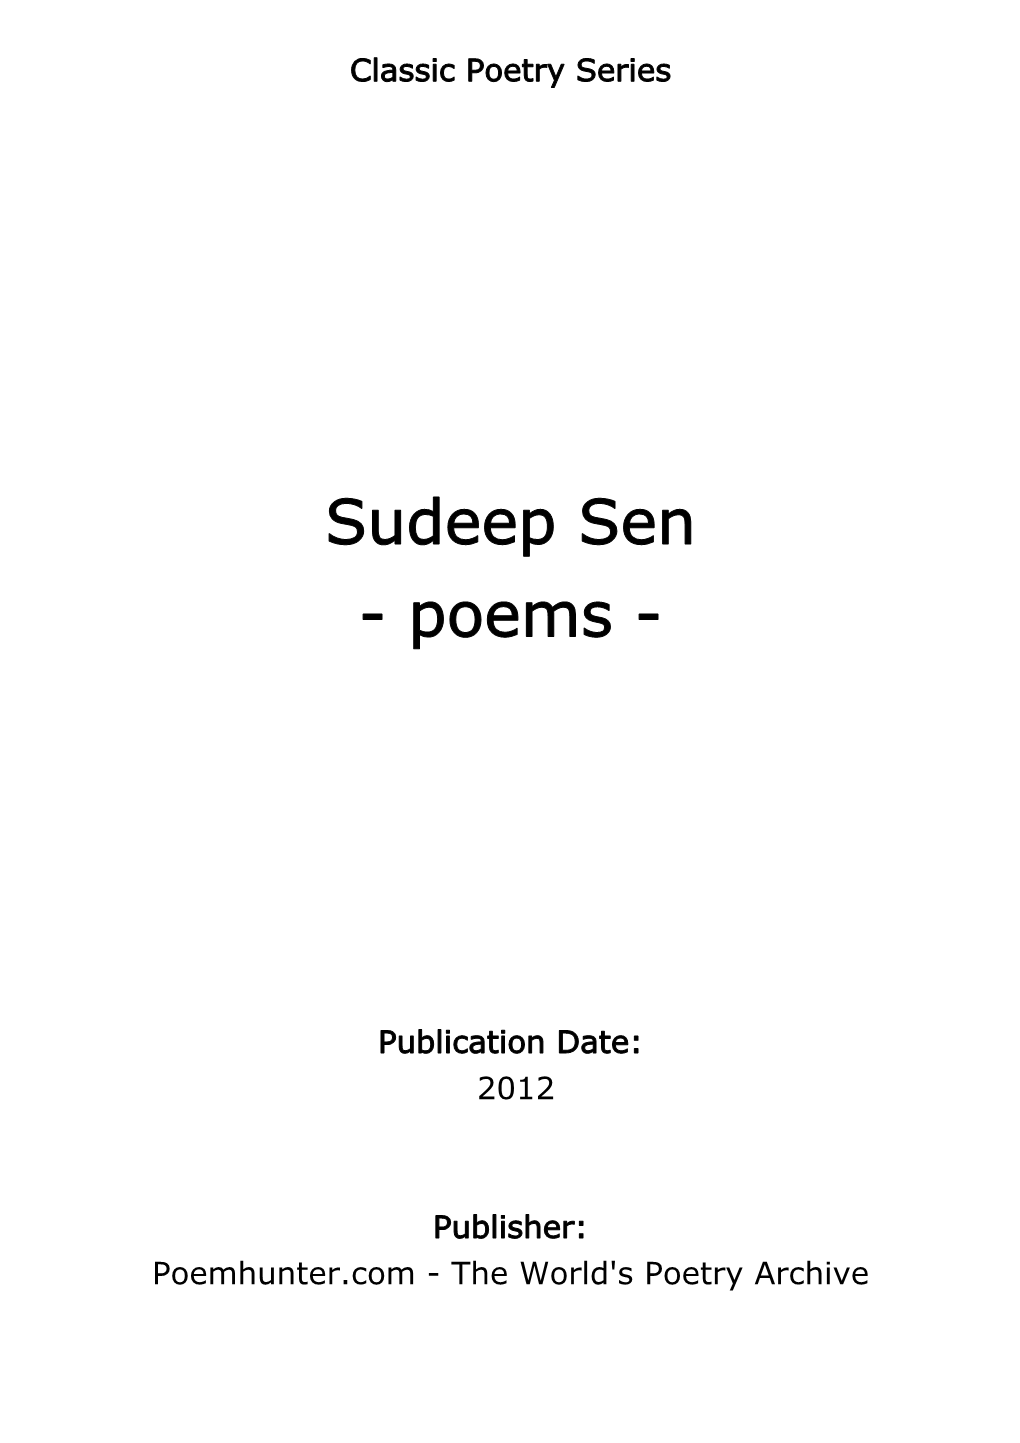 Sudeep Sen - Poems